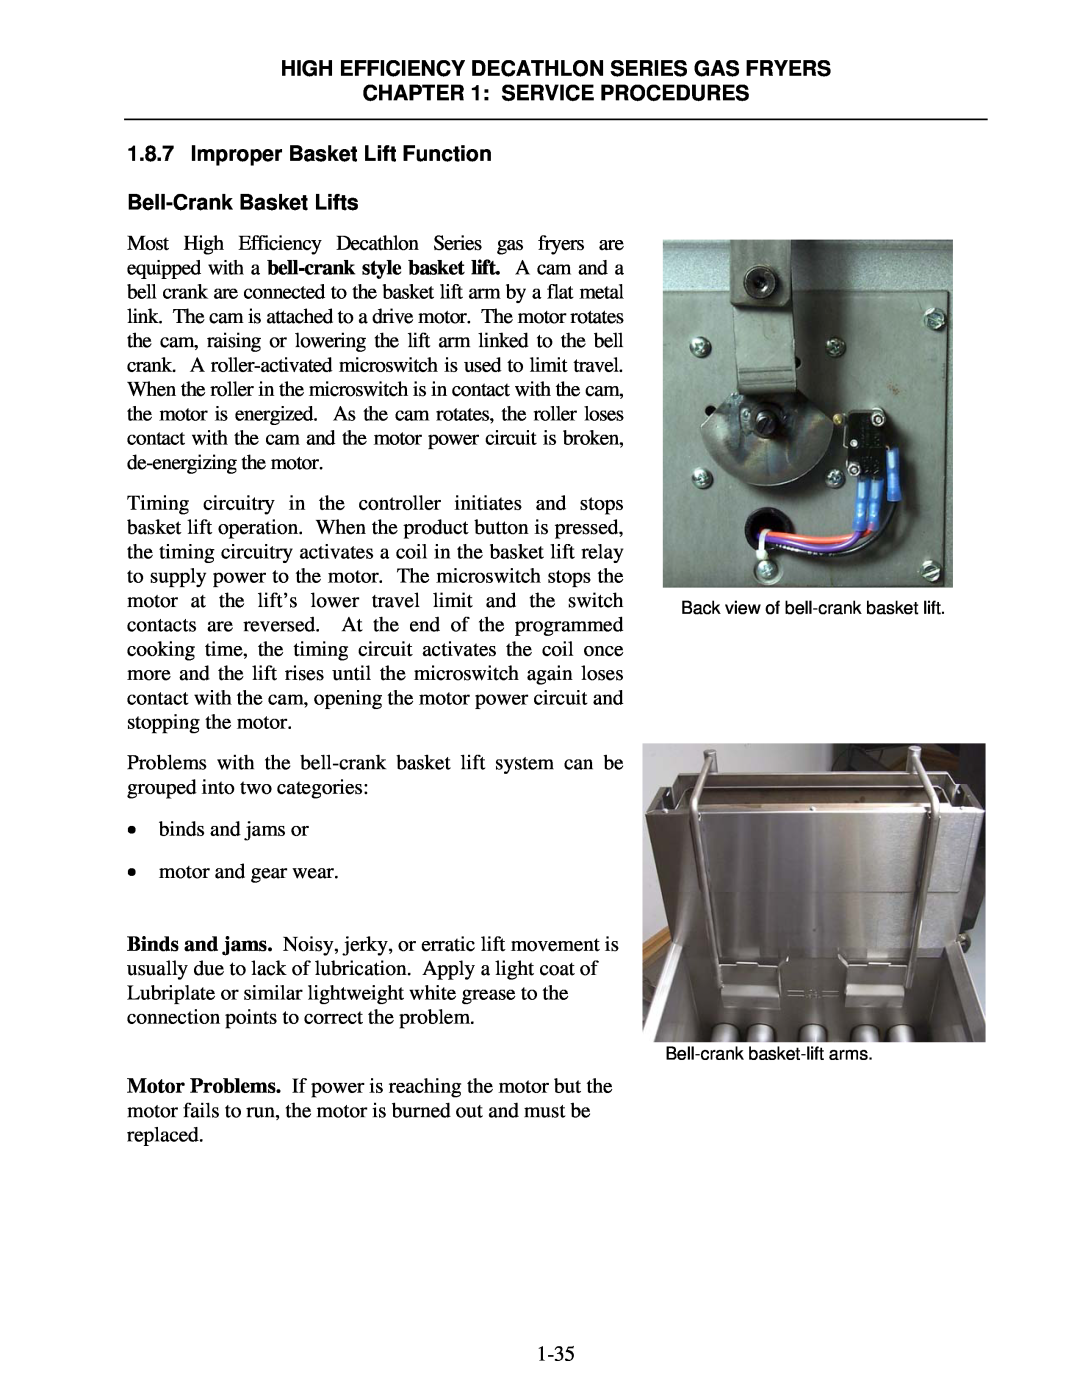 Frymaster FPHD manual Improper Basket Lift Function, Bell-CrankBasket Lifts, High Efficiency Decathlon Series Gas Fryers 